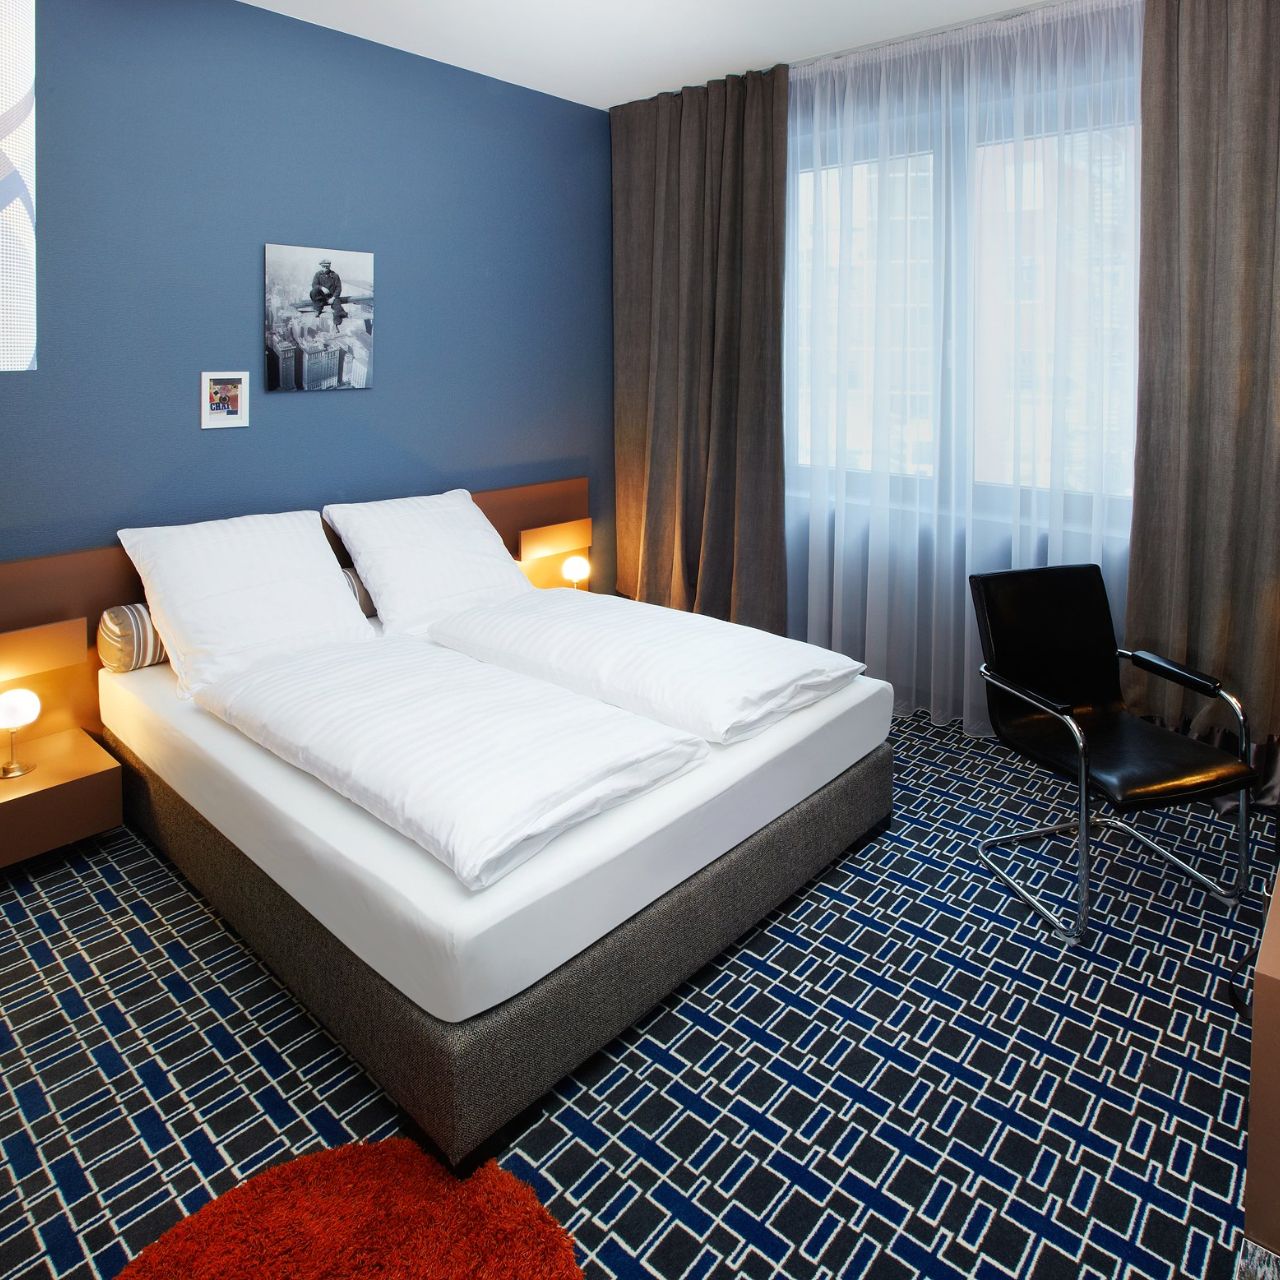 25hours Hotel The Trip in Frankfurt am Main - HOTEL DE